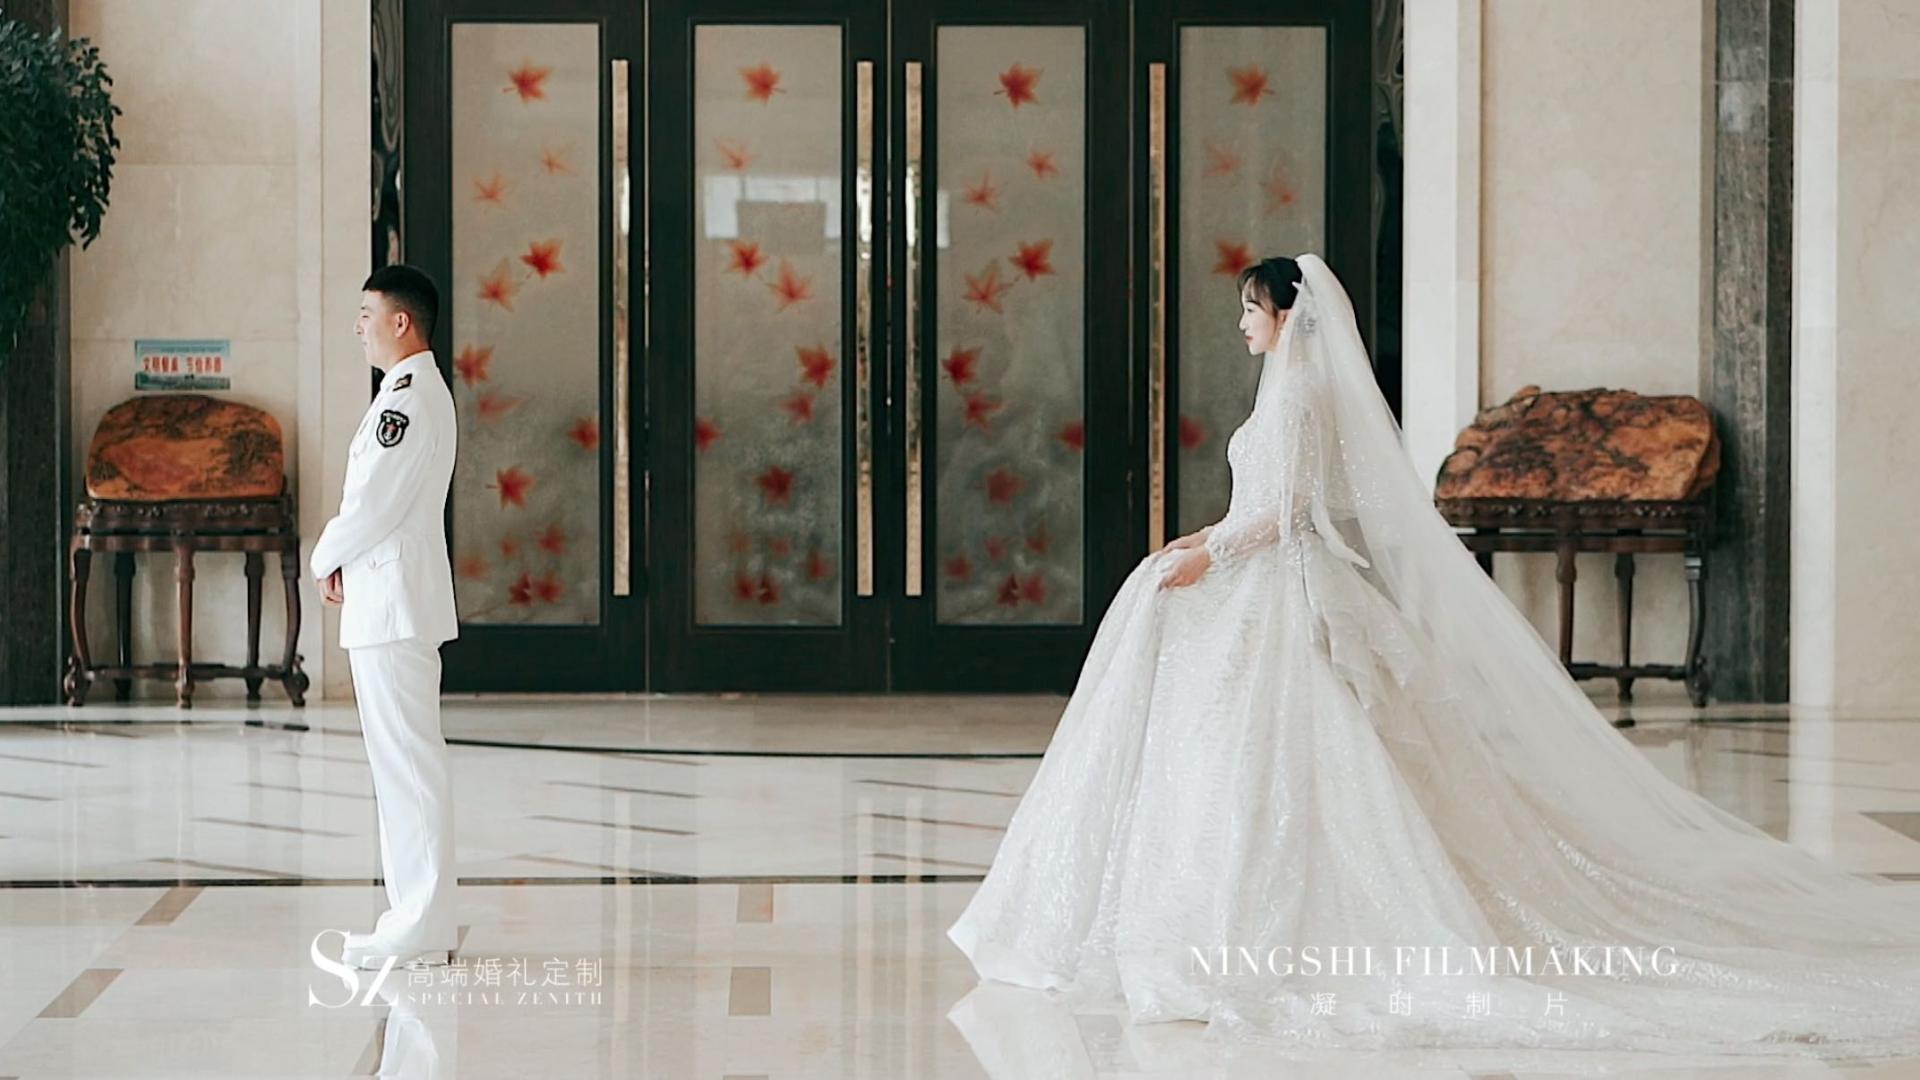 「 LU&WANG 」· SZ高端婚礼 | NINGSHIFILM出品